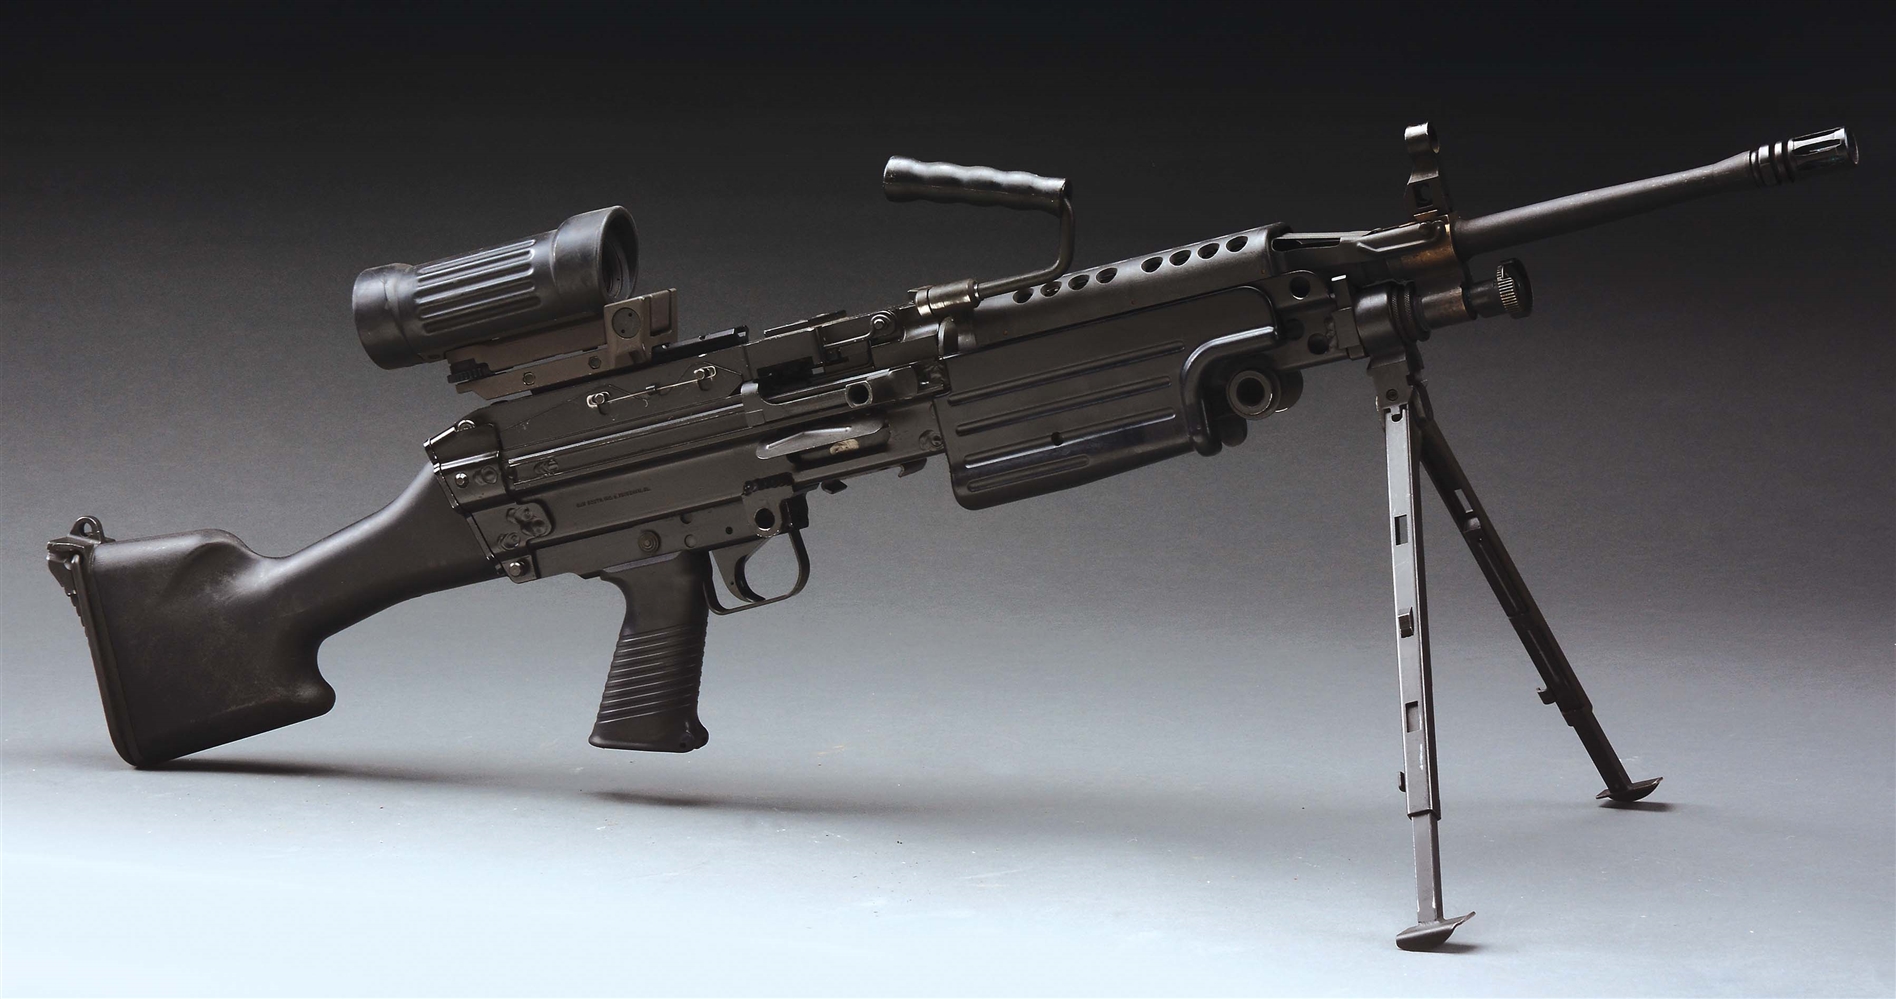 (N) INCREDIBLY RARE MODERN MILITARY FN HERSTAL “MINI-MI” MACHINE GUN (PRE-86 DEALER SAMPLE).